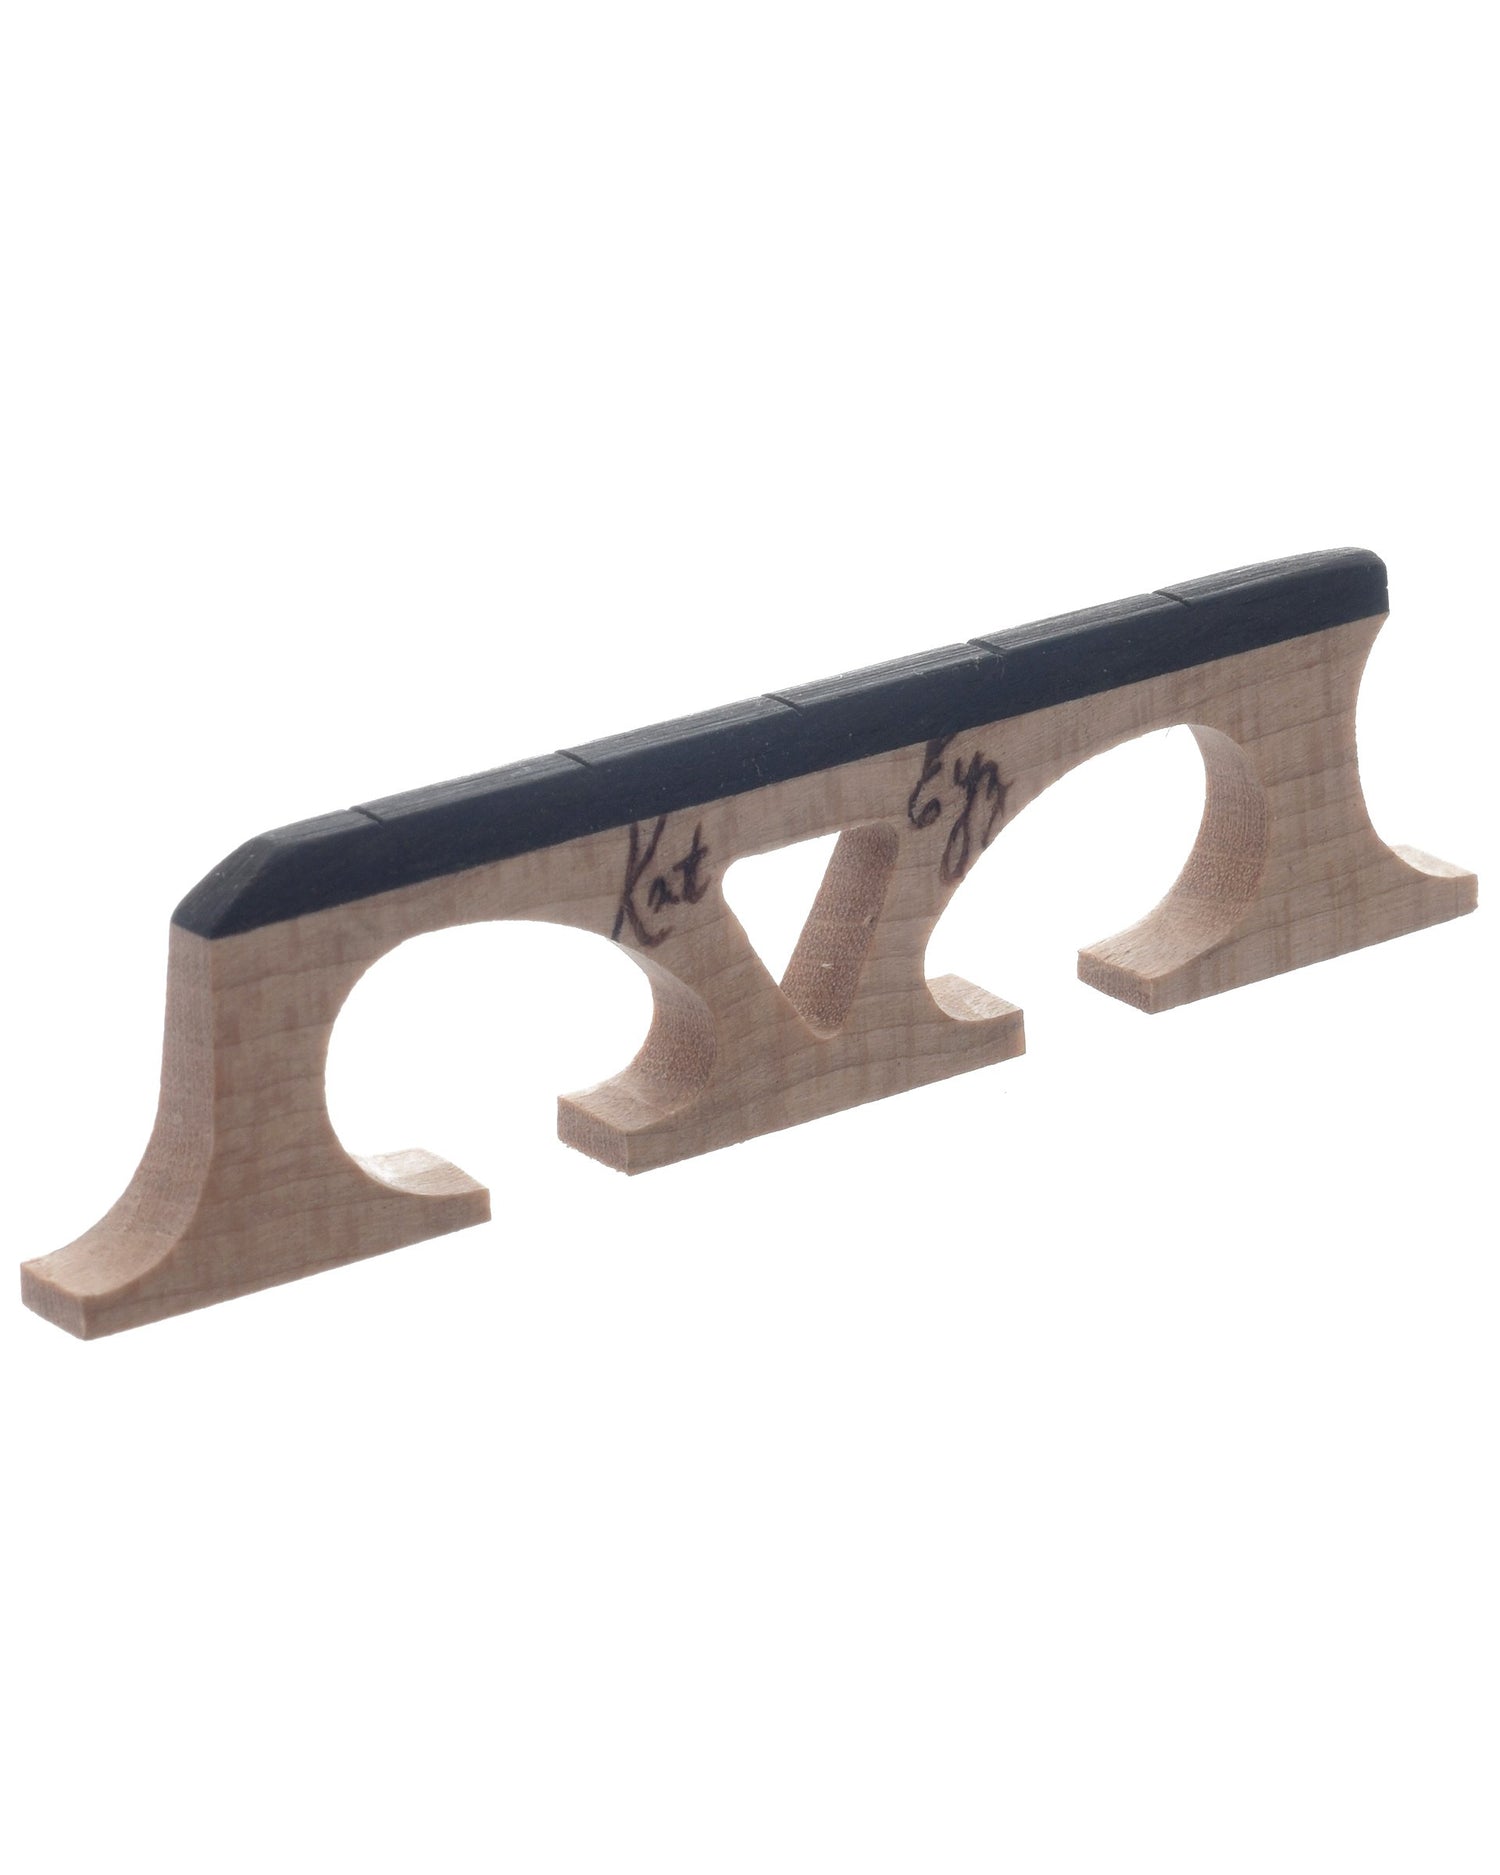 Image 1 of Kat Eyz Old Wood Banjo Bridge, Standard Spaced, 11/16" High - SKU# KEBB1-ST-11/16 : Product Type Accessories & Parts : Elderly Instruments